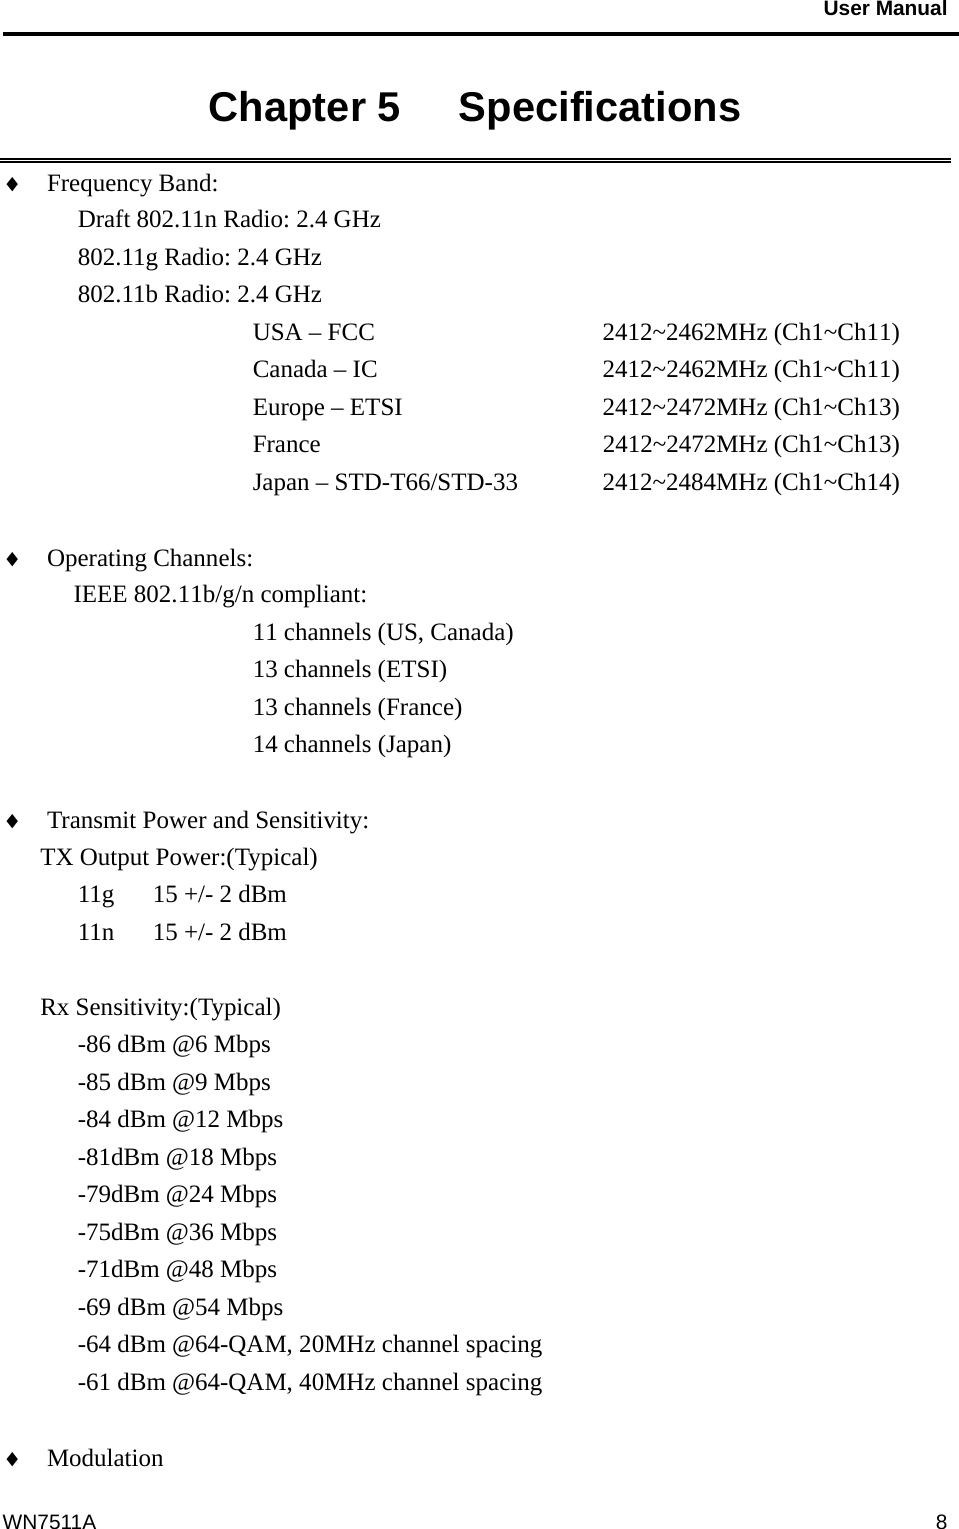                                           User Manual                                              WN7511A  8Chapter 5   Specifications   ♦  Frequency Band:   Draft 802.11n Radio: 2.4 GHz    802.11g Radio: 2.4 GHz   802.11b Radio: 2.4 GHz USA – FCC       2412~2462MHz (Ch1~Ch11)      Canada – IC     2412~2462MHz (Ch1~Ch11)      Europe – ETSI     2412~2472MHz (Ch1~Ch13)      France      2412~2472MHz (Ch1~Ch13)      Japan – STD-T66/STD-33  2412~2484MHz (Ch1~Ch14)  ♦  Operating Channels:    IEEE 802.11b/g/n compliant: 11 channels (US, Canada) 13 channels (ETSI) 13 channels (France) 14 channels (Japan)  ♦  Transmit Power and Sensitivity:   TX Output Power:(Typical) 11g  15 +/- 2 dBm 11n  15 +/- 2 dBm  Rx Sensitivity:(Typical) -86 dBm @6 Mbps -85 dBm @9 Mbps -84 dBm @12 Mbps -81dBm @18 Mbps -79dBm @24 Mbps -75dBm @36 Mbps -71dBm @48 Mbps -69 dBm @54 Mbps -64 dBm @64-QAM, 20MHz channel spacing -61 dBm @64-QAM, 40MHz channel spacing  ♦  Modulation                      